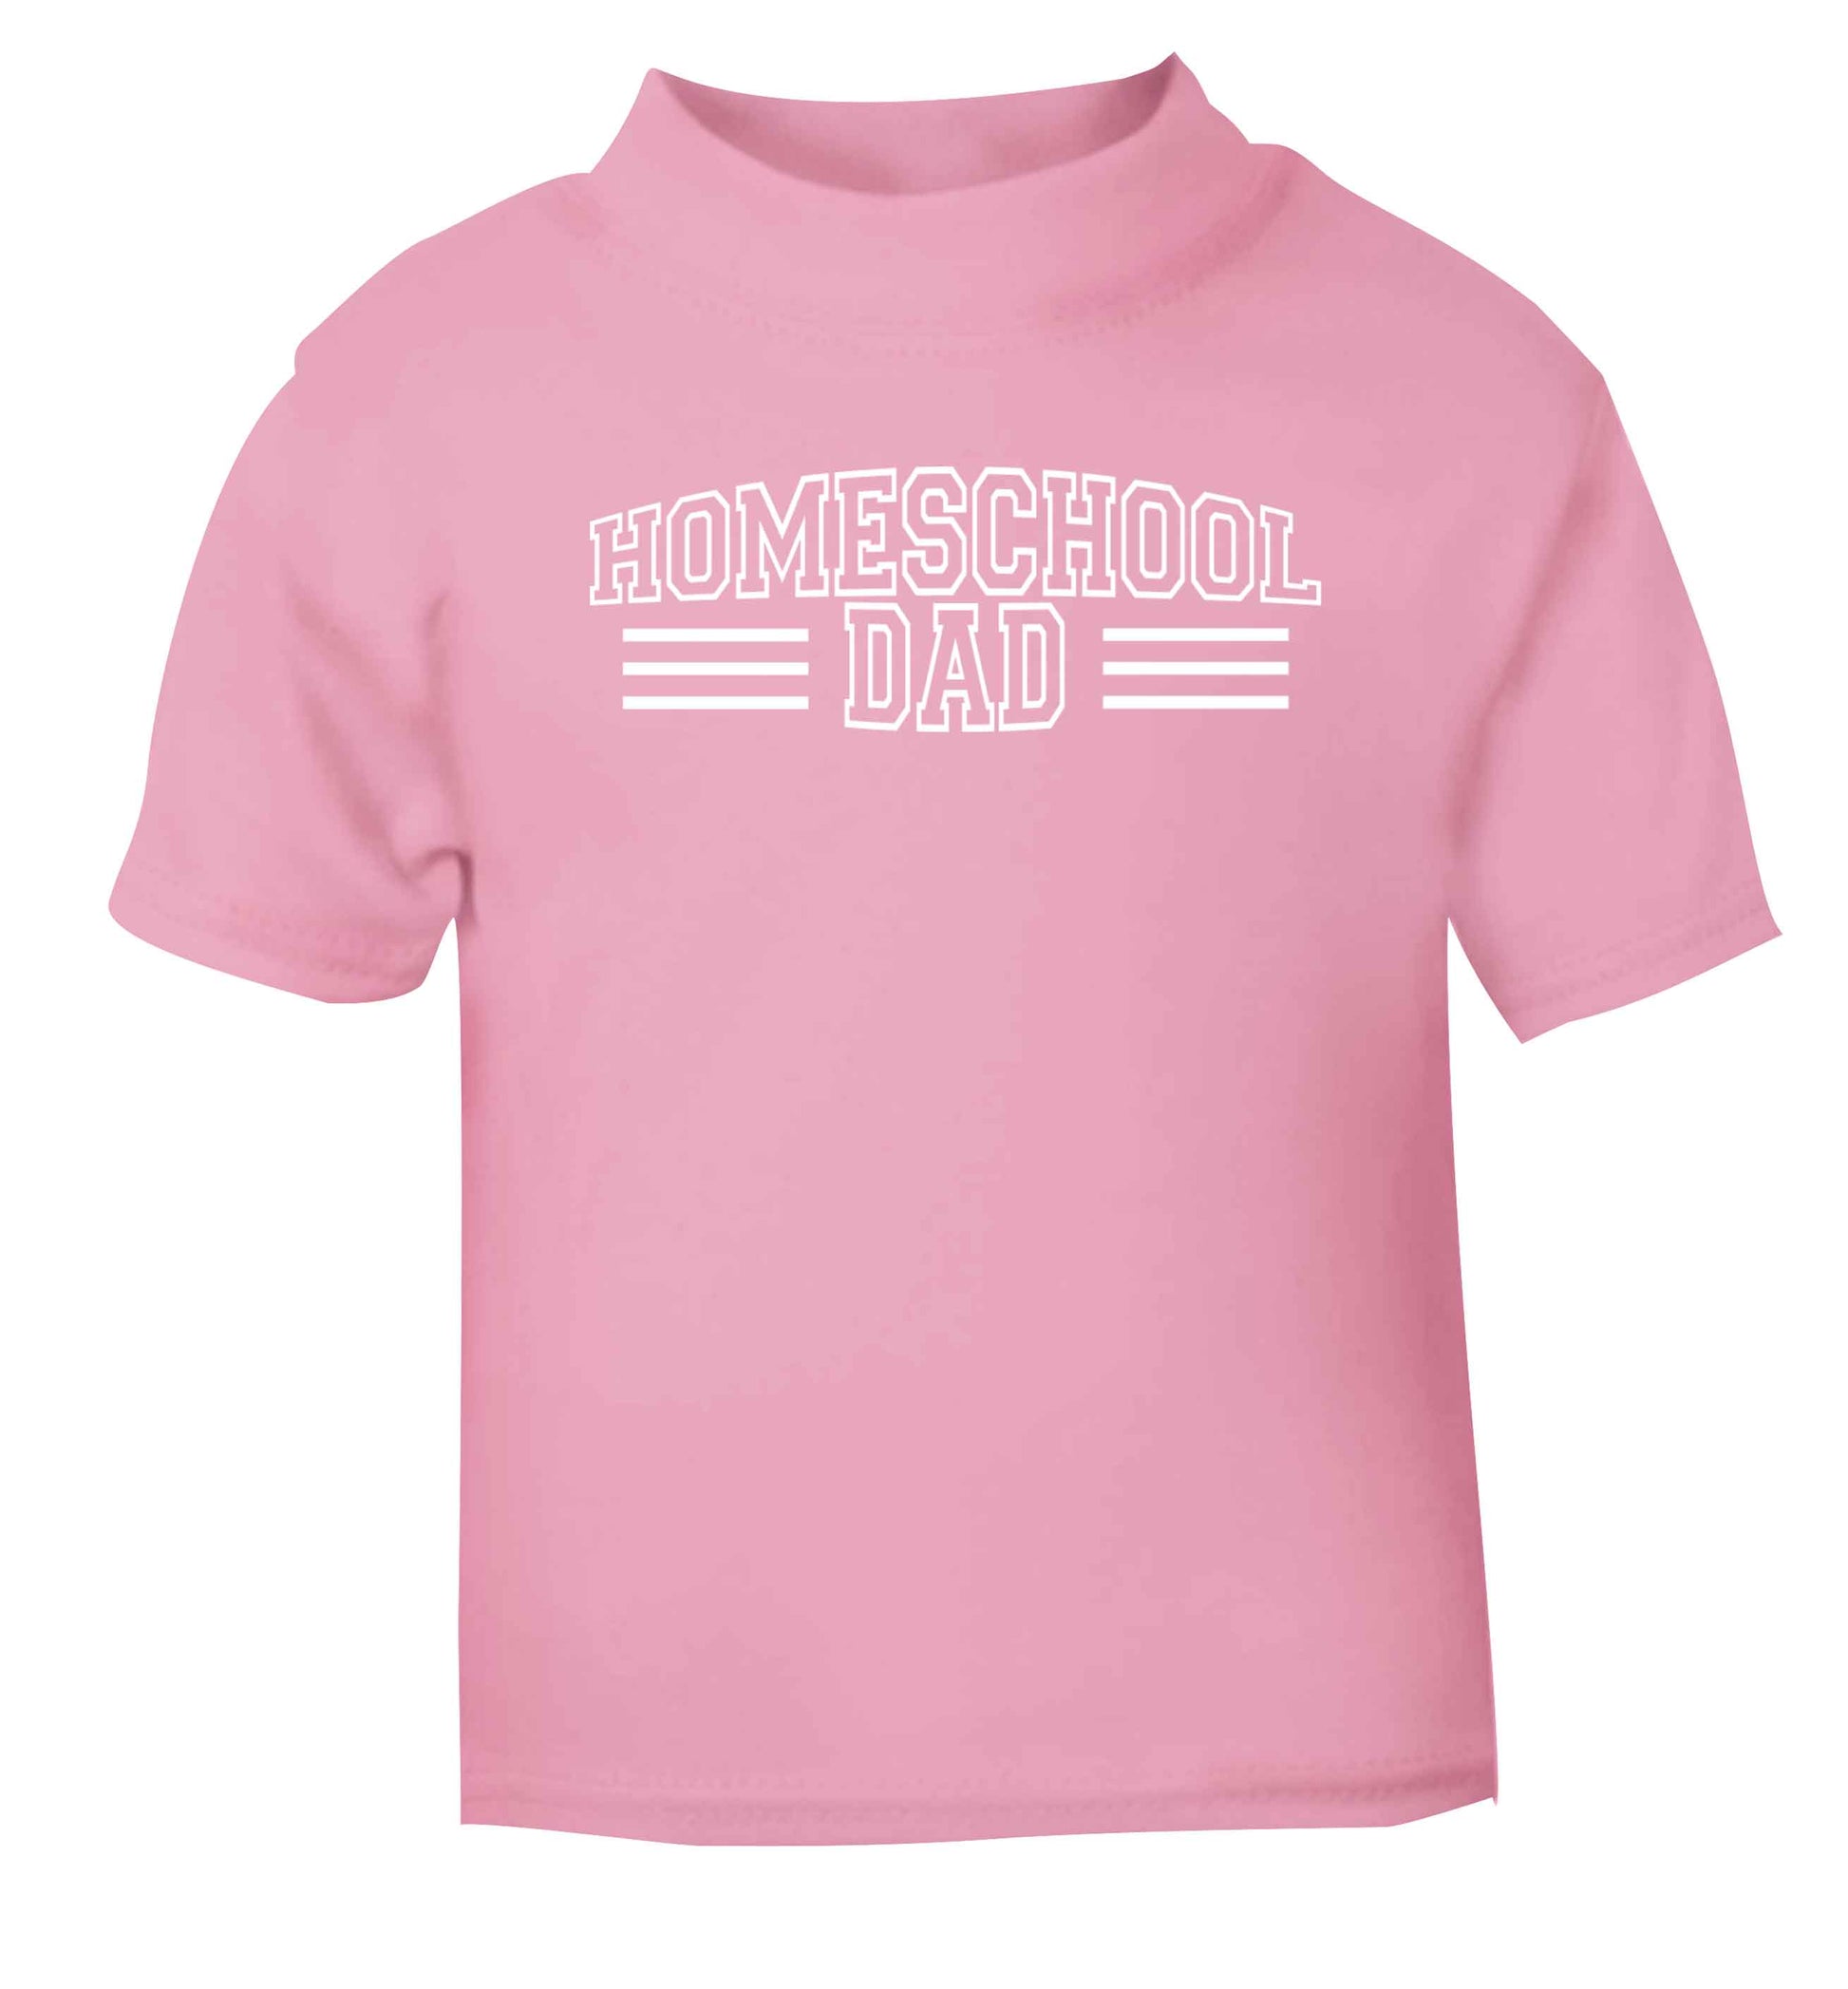 Homeschool dad light pink Baby Toddler Tshirt 2 Years